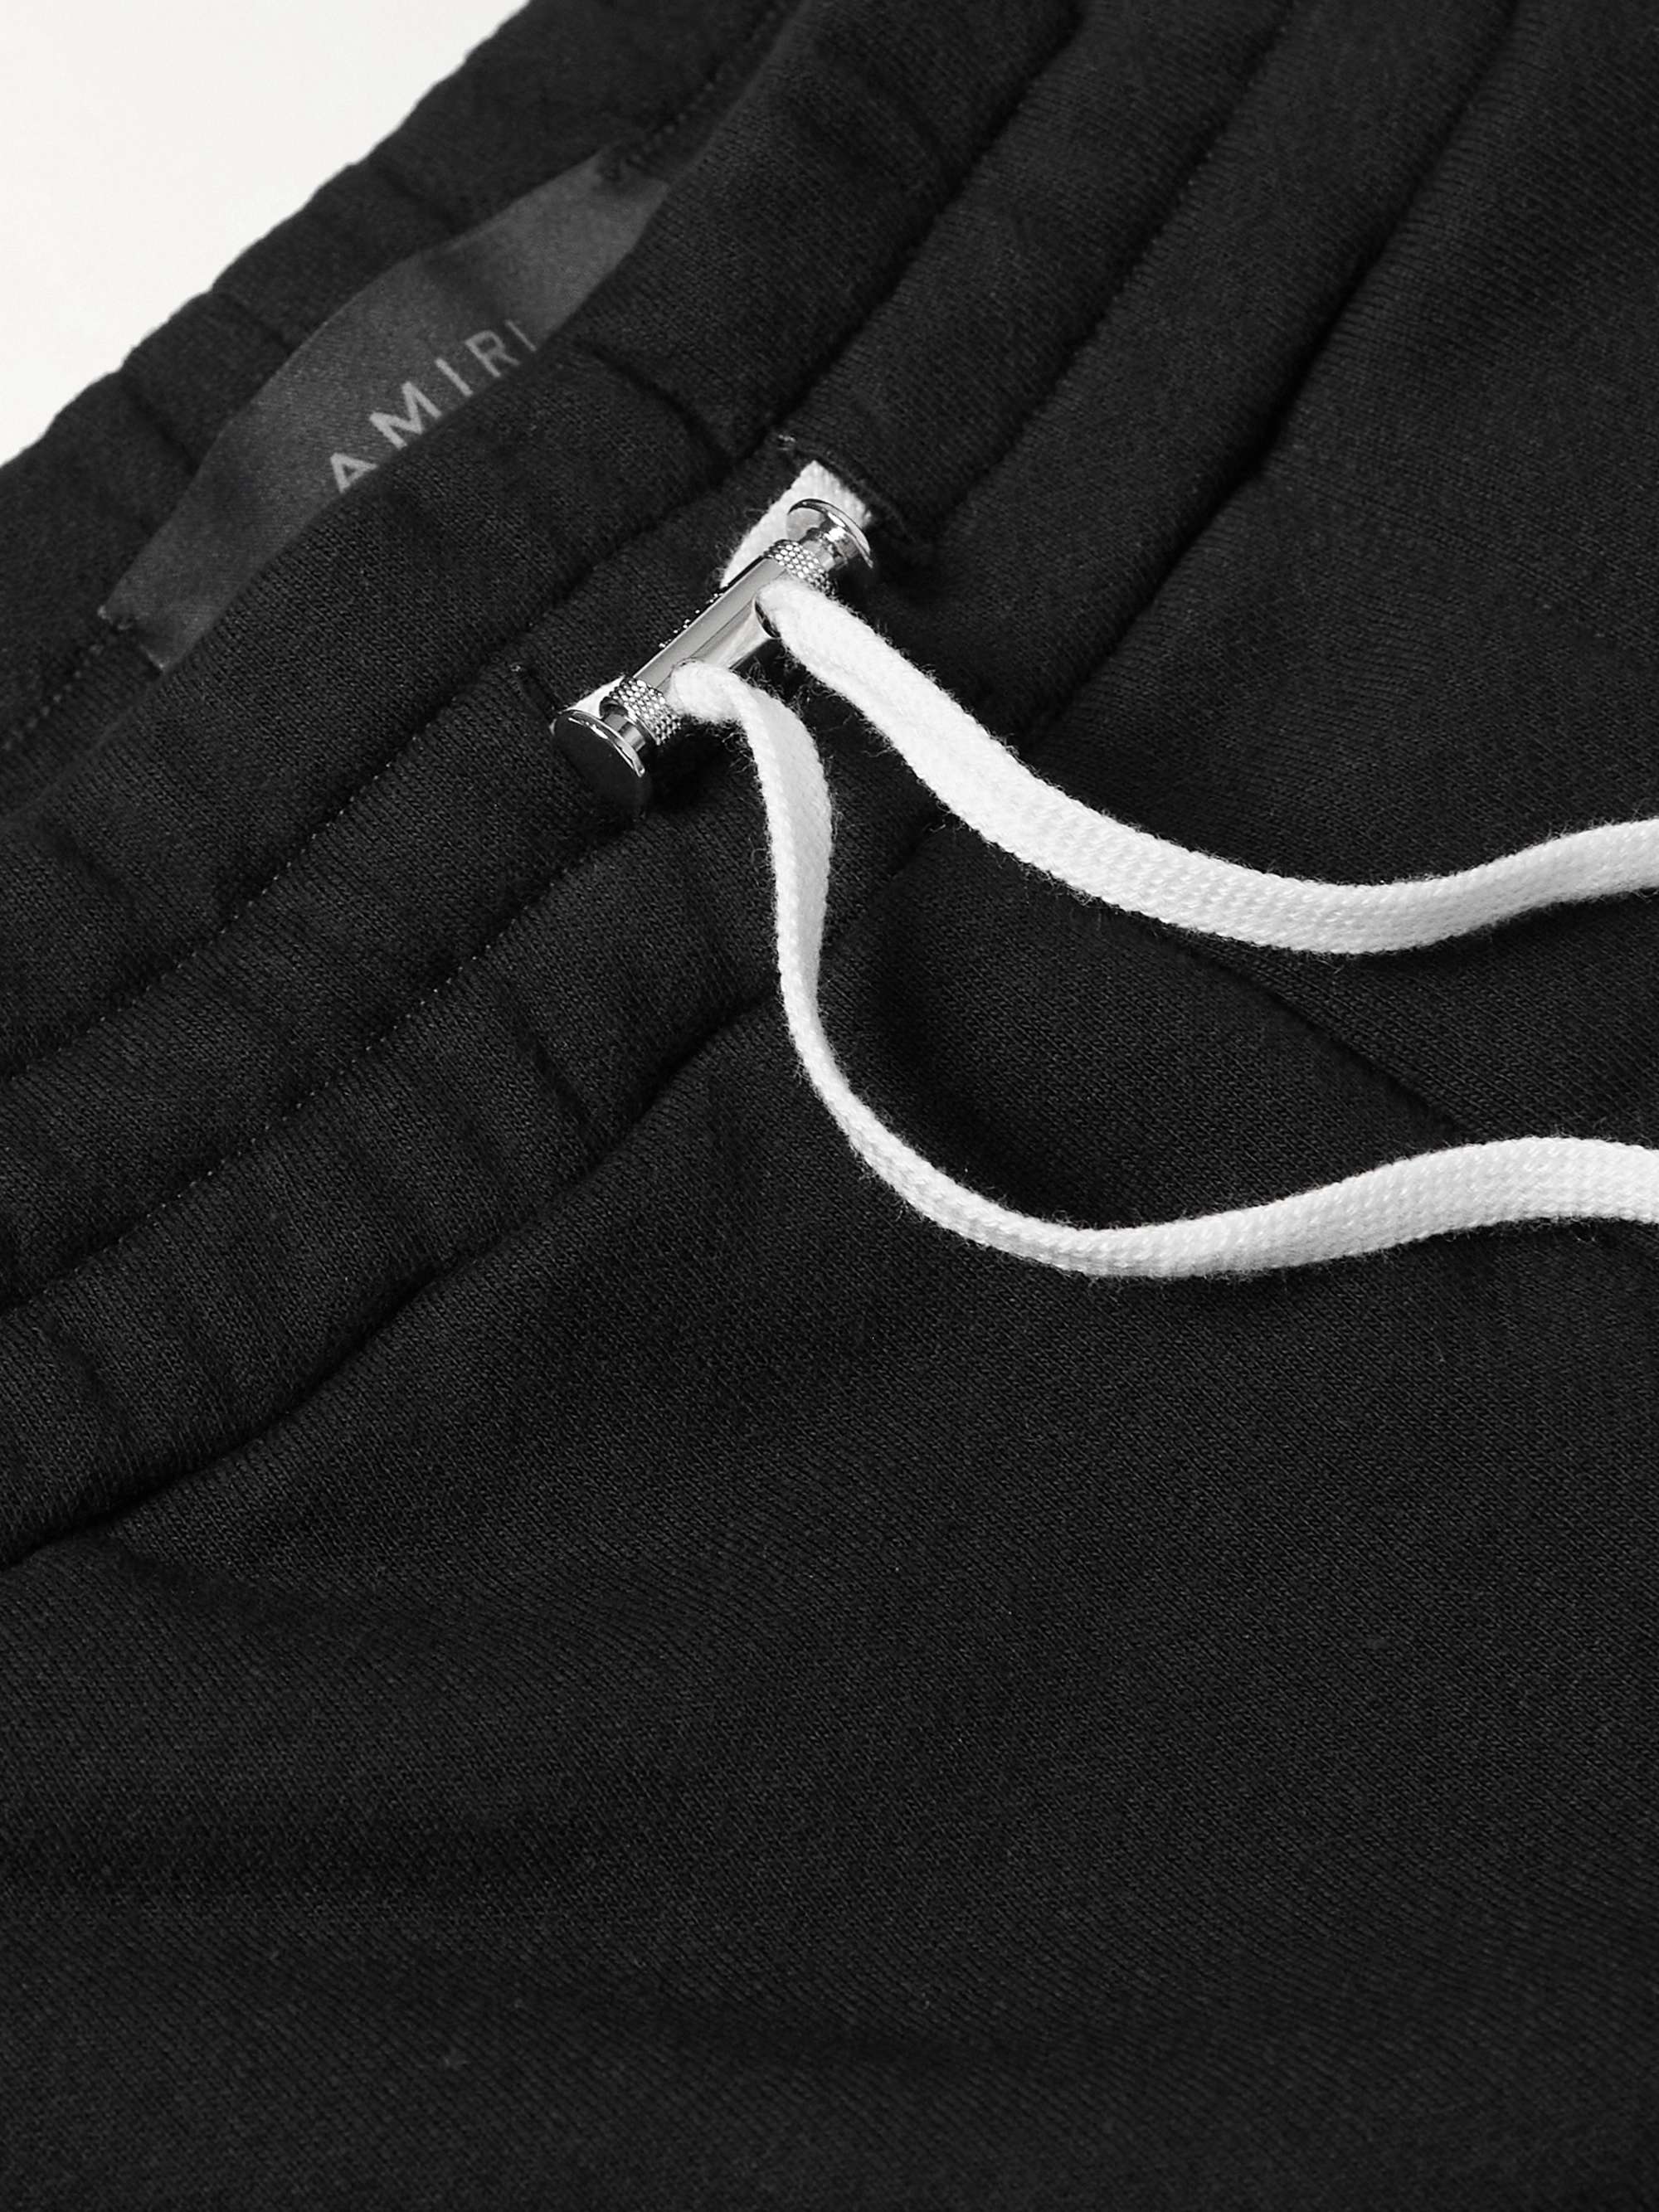 AMIRI Zoltar Tapered Logo-Print Cotton-Jersey Sweatpants